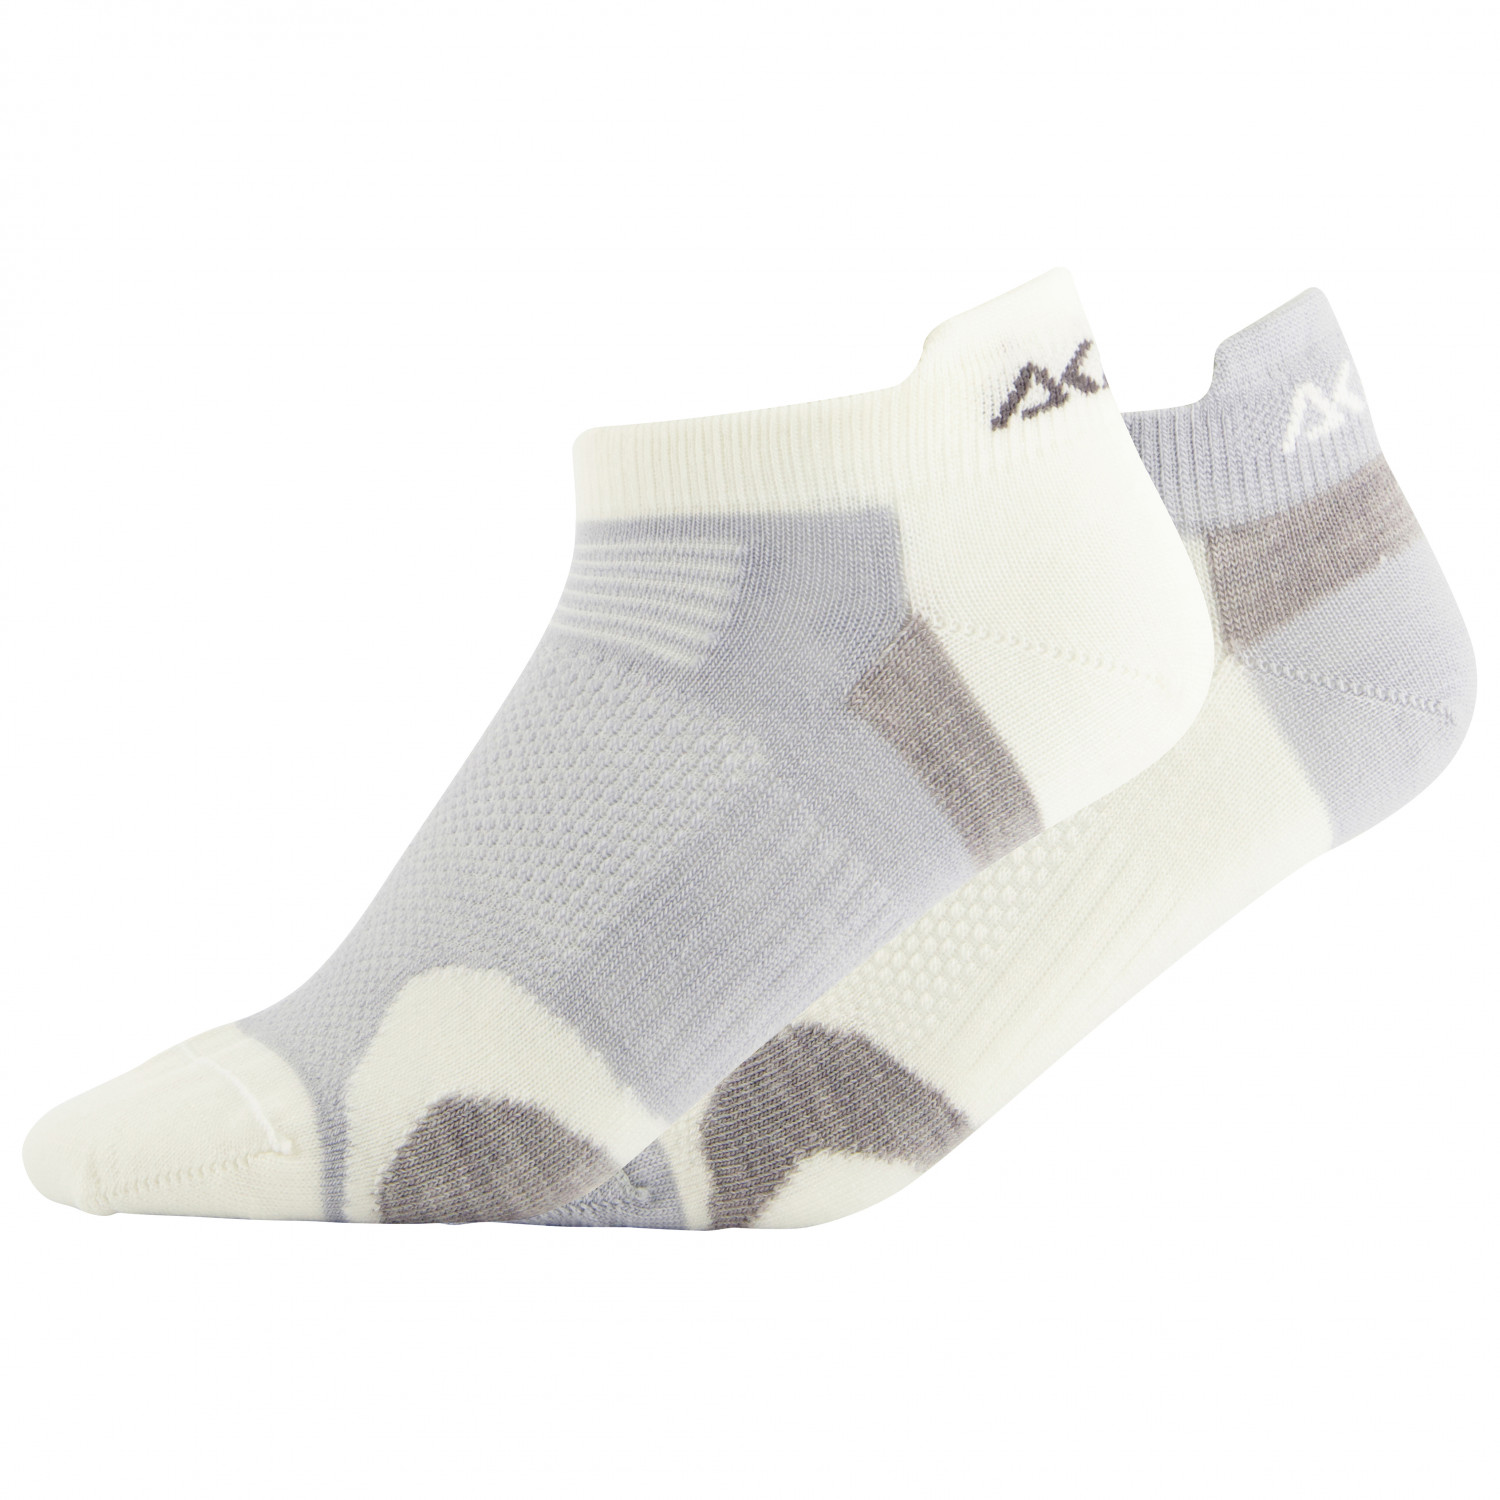 Носки из мериноса Aclima Ankle Socks 2 Pack, цвет White/Grey носки спортивные yonex socks 8422 x3 white l